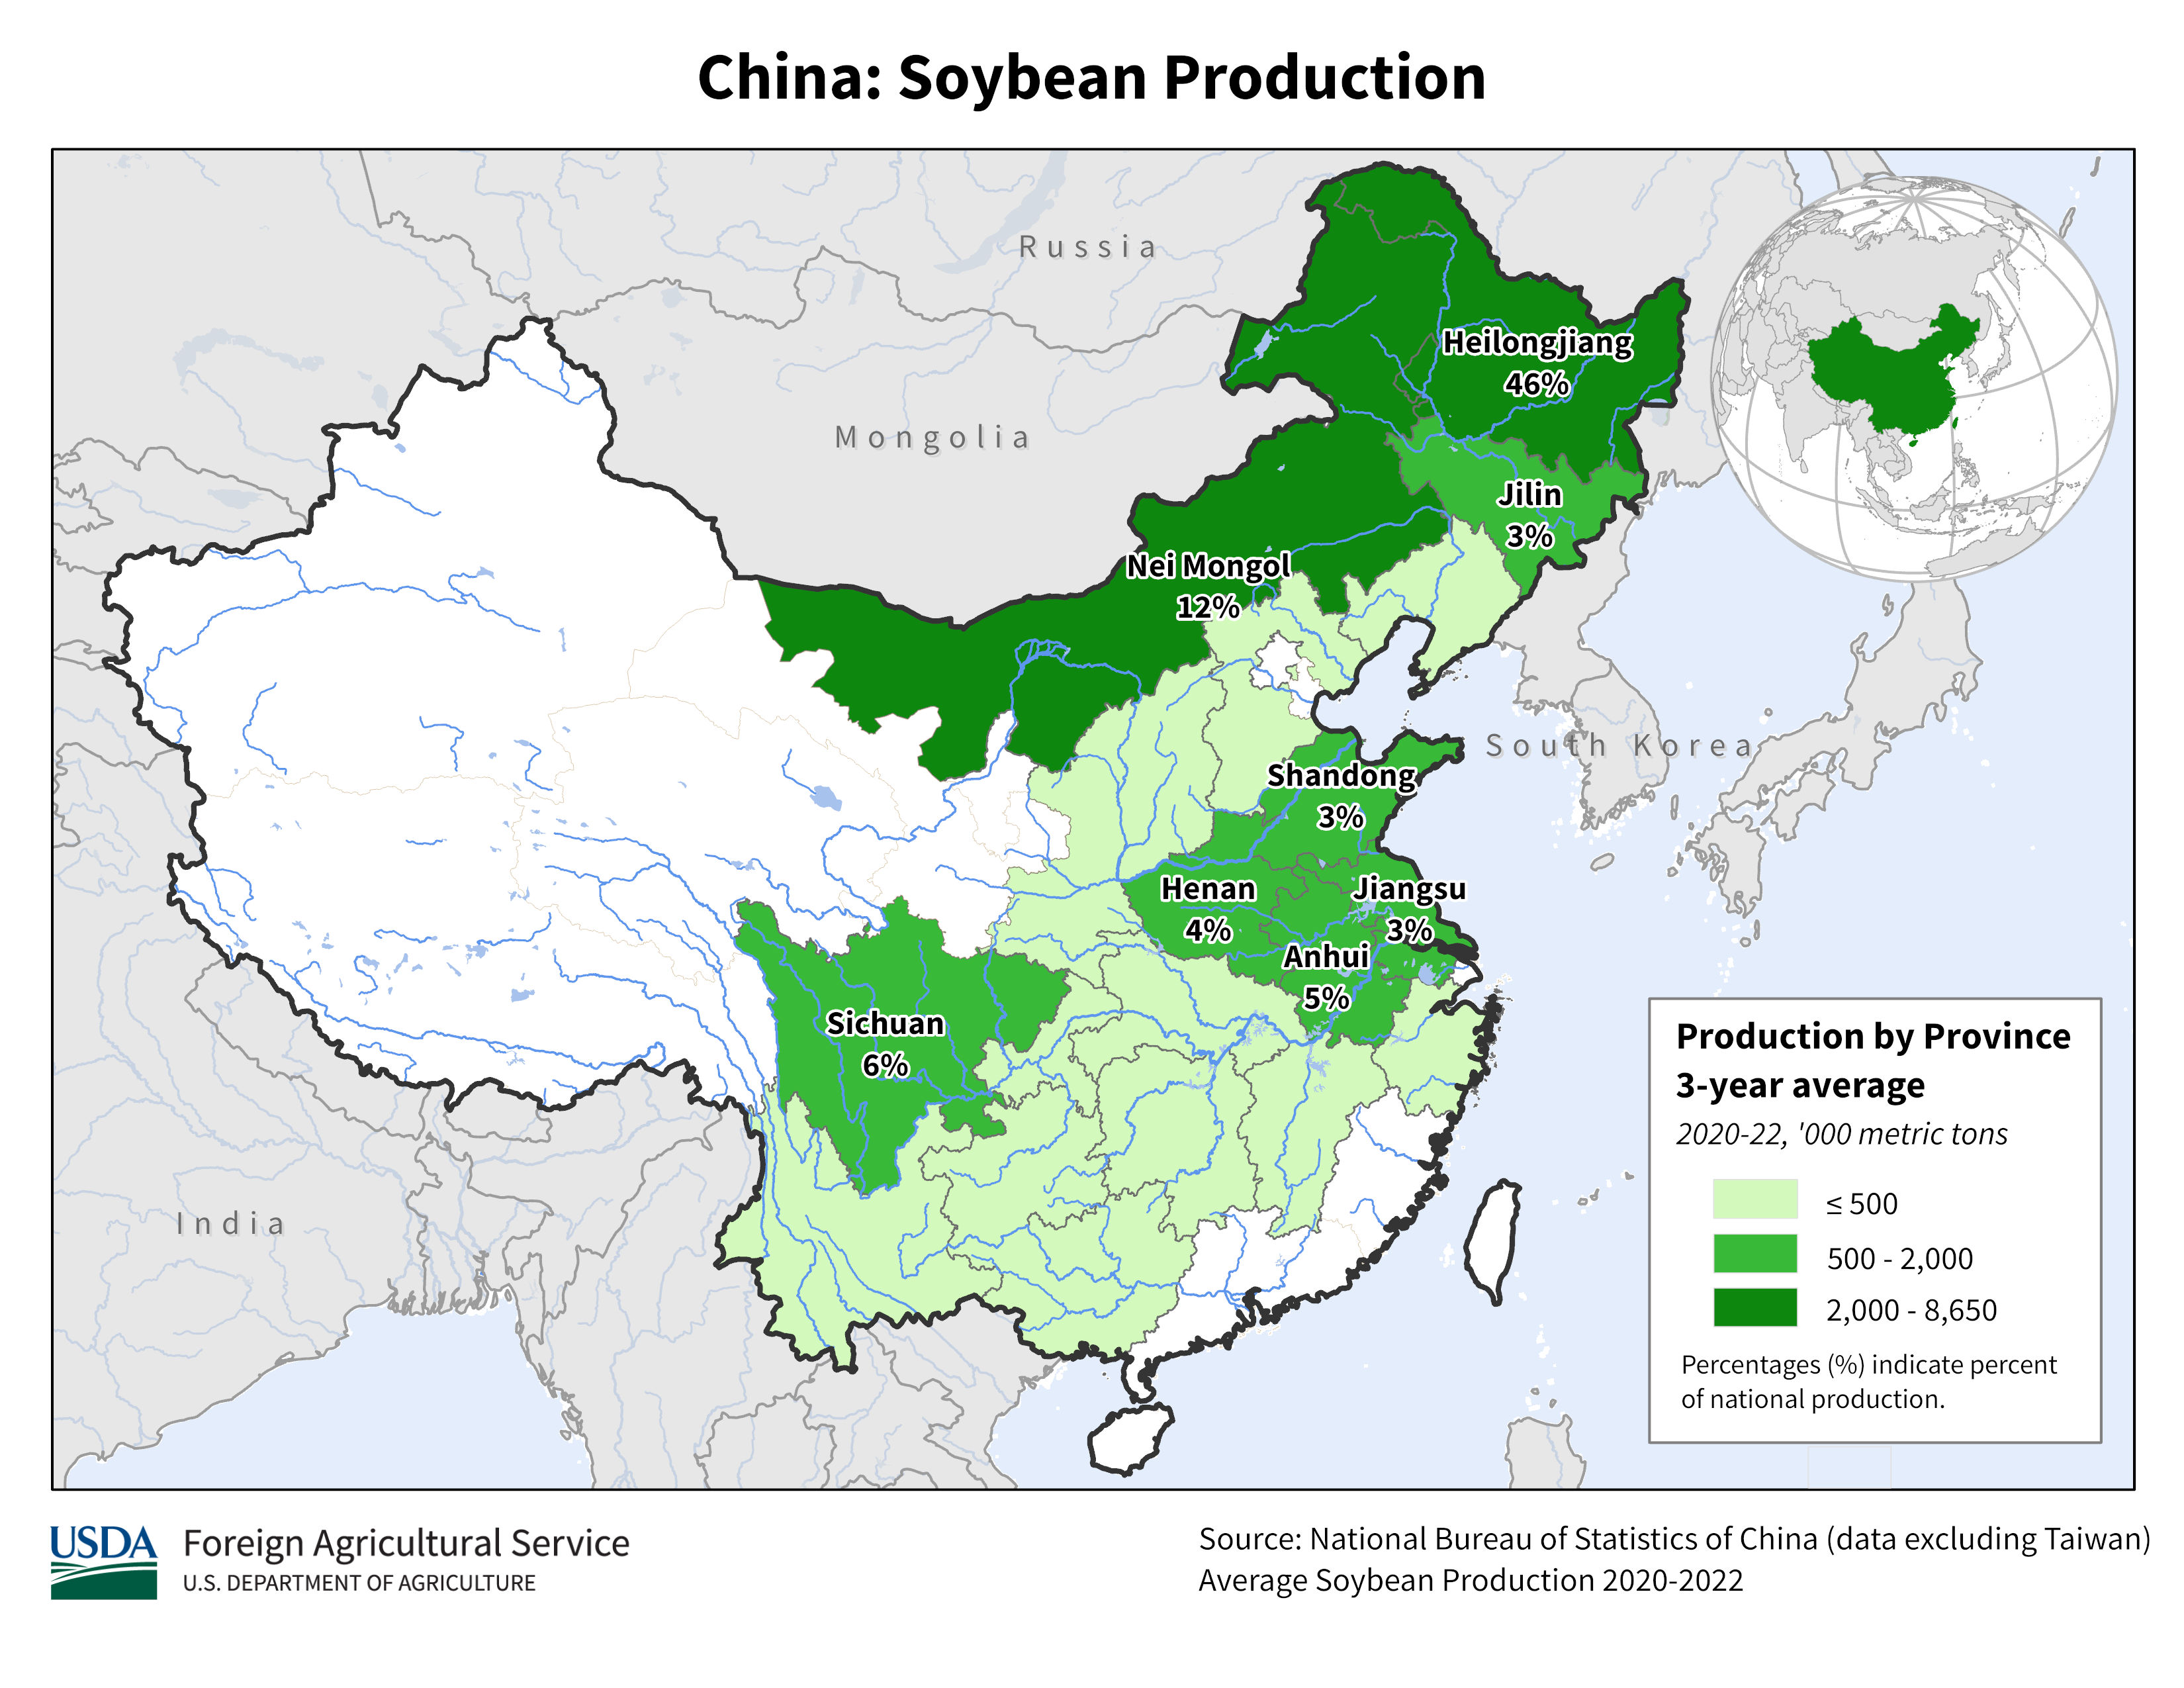 https://ipad.fas.usda.gov/rssiws/al/crop_production_maps/China/China_Soybean.jpg